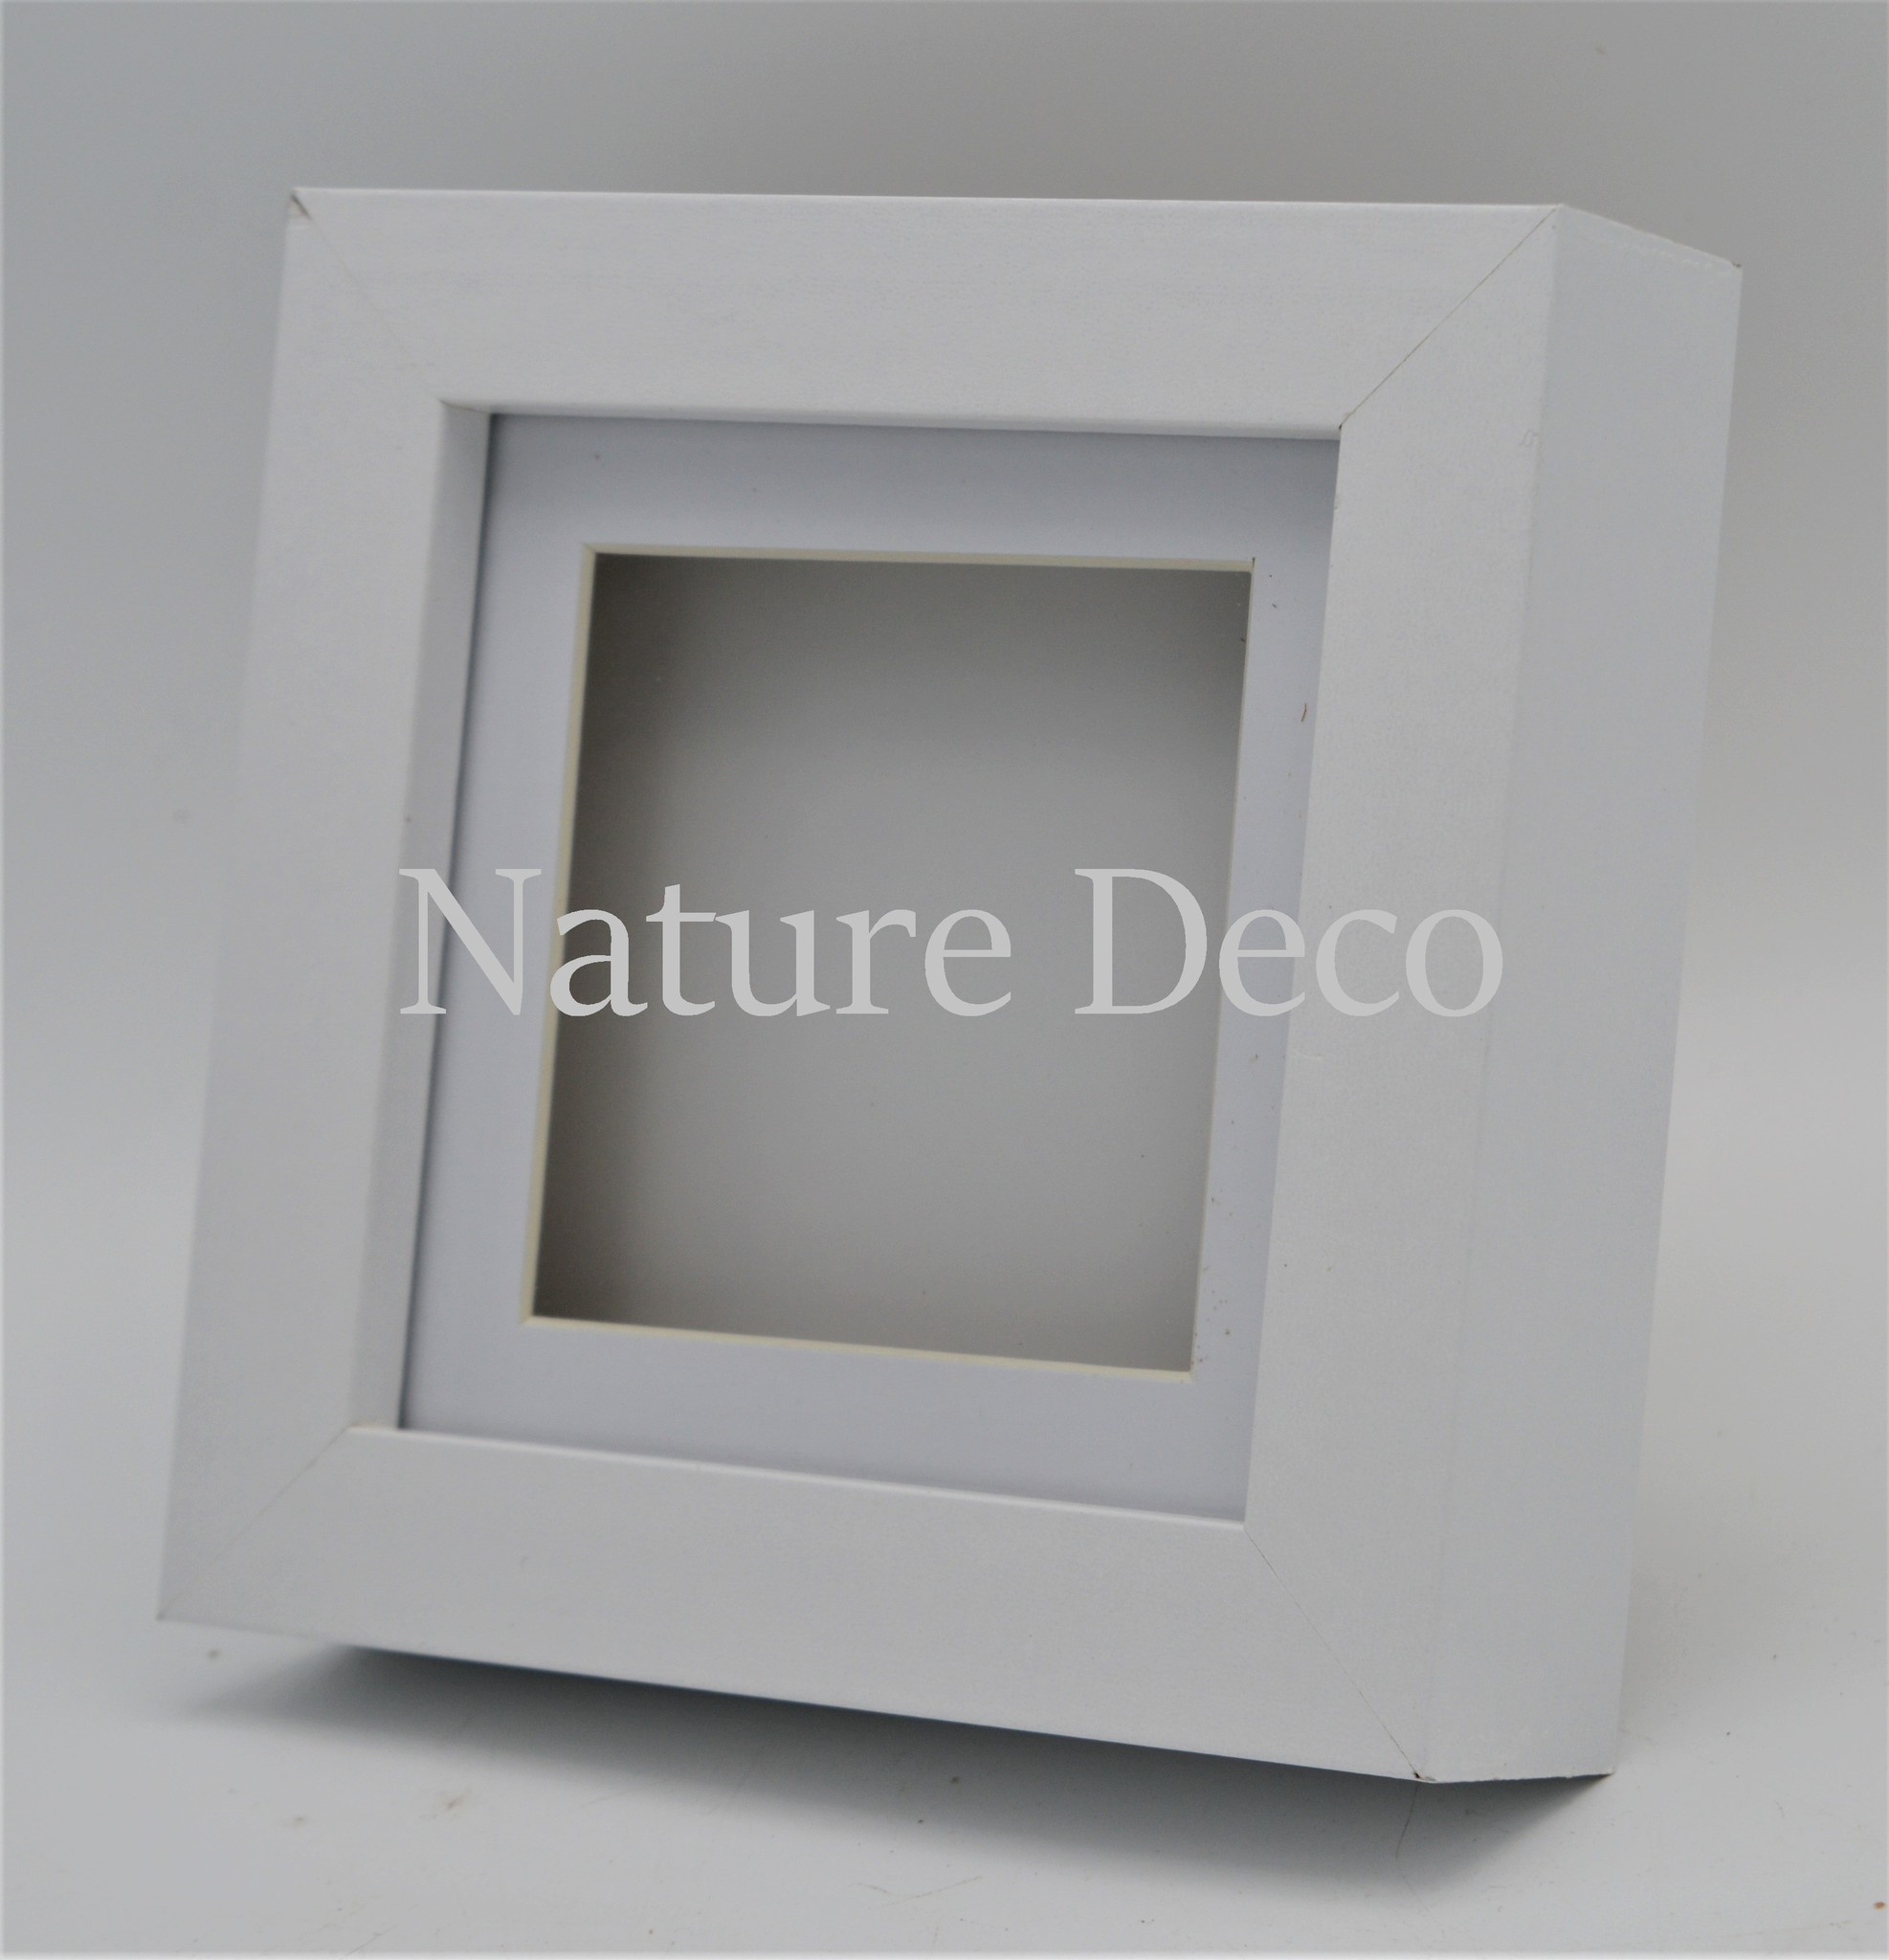 dichtheid Kind historisch Luxe 3D lijst klein wit 12 x 12cm - Nature Deco